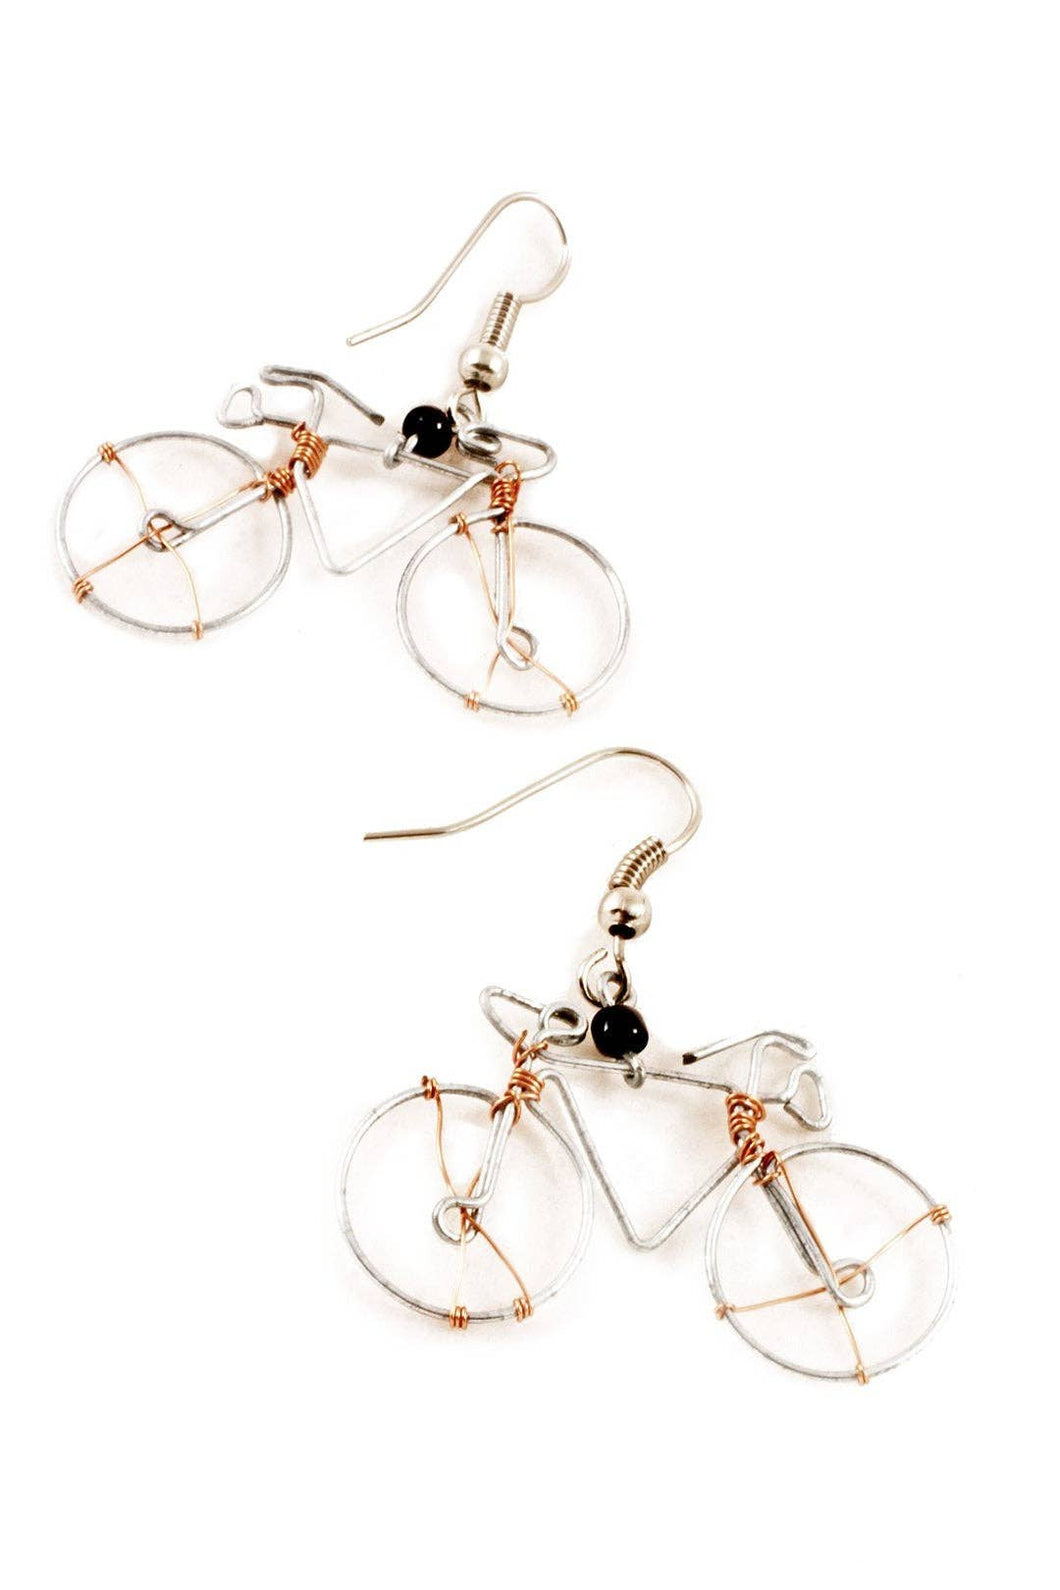 Bicycle Earrings (Swahili African Modern)